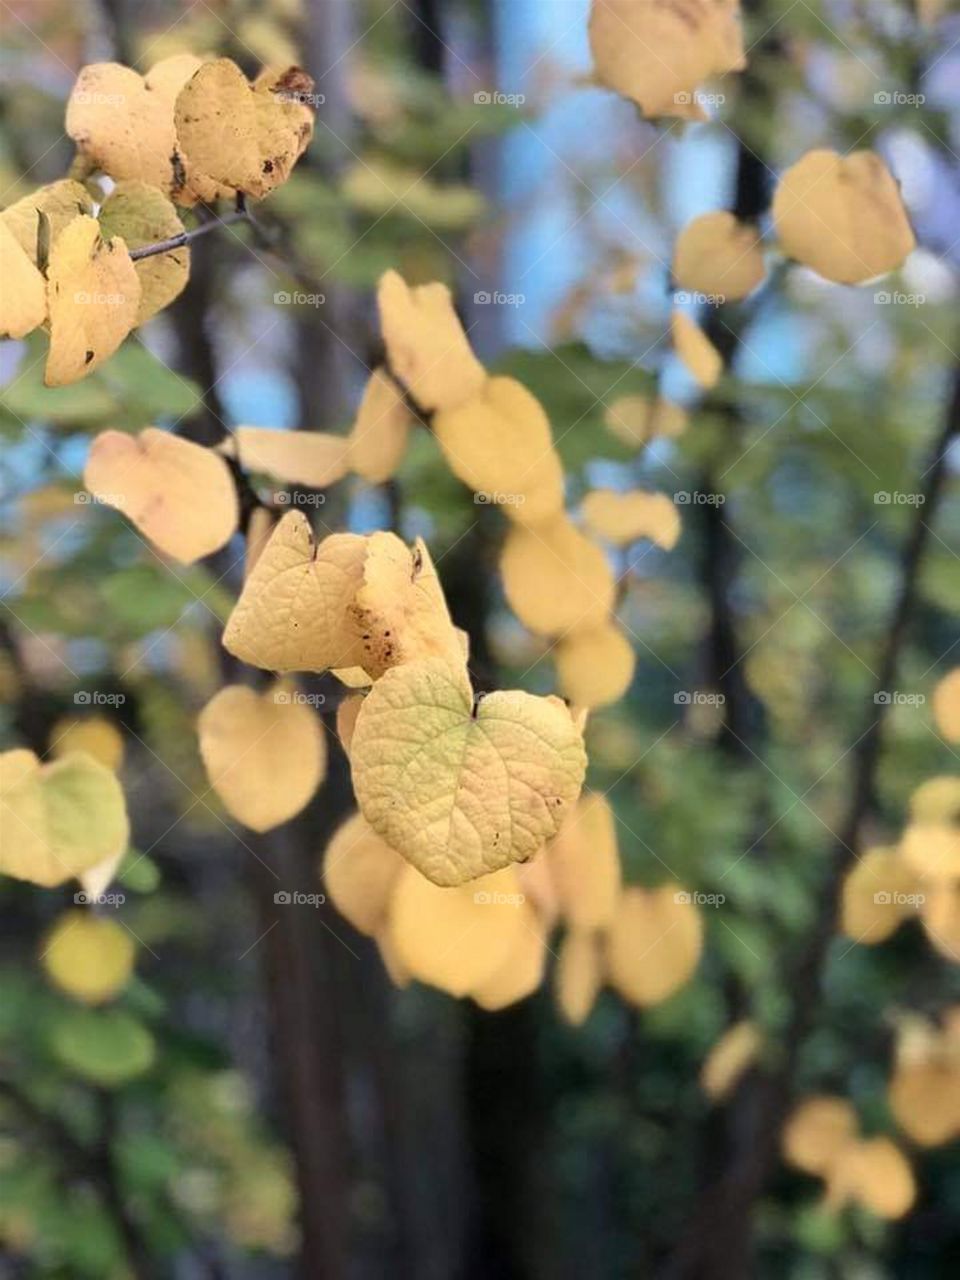 The Flora: Vibrant Yellow